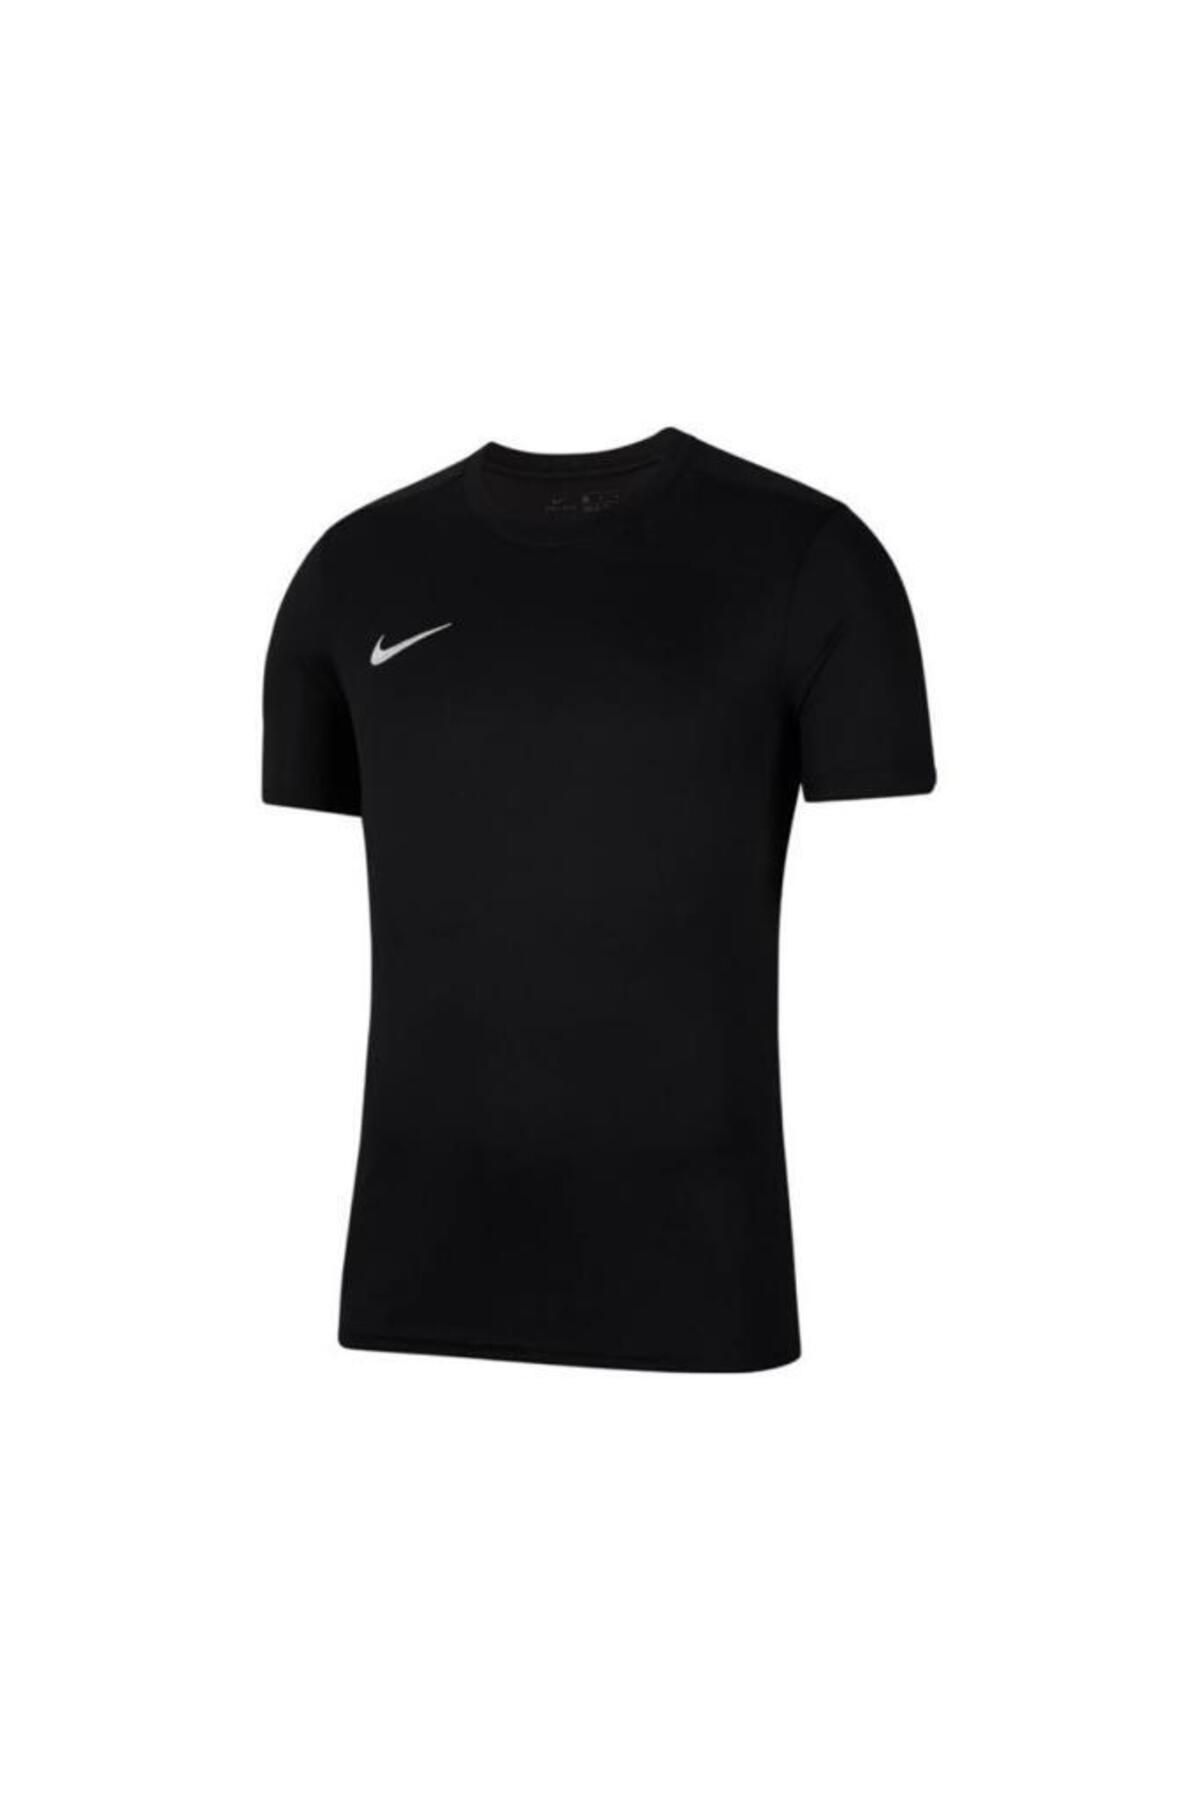 Nike Dry Park Vıı Bv6708-010 Erkek Tişört